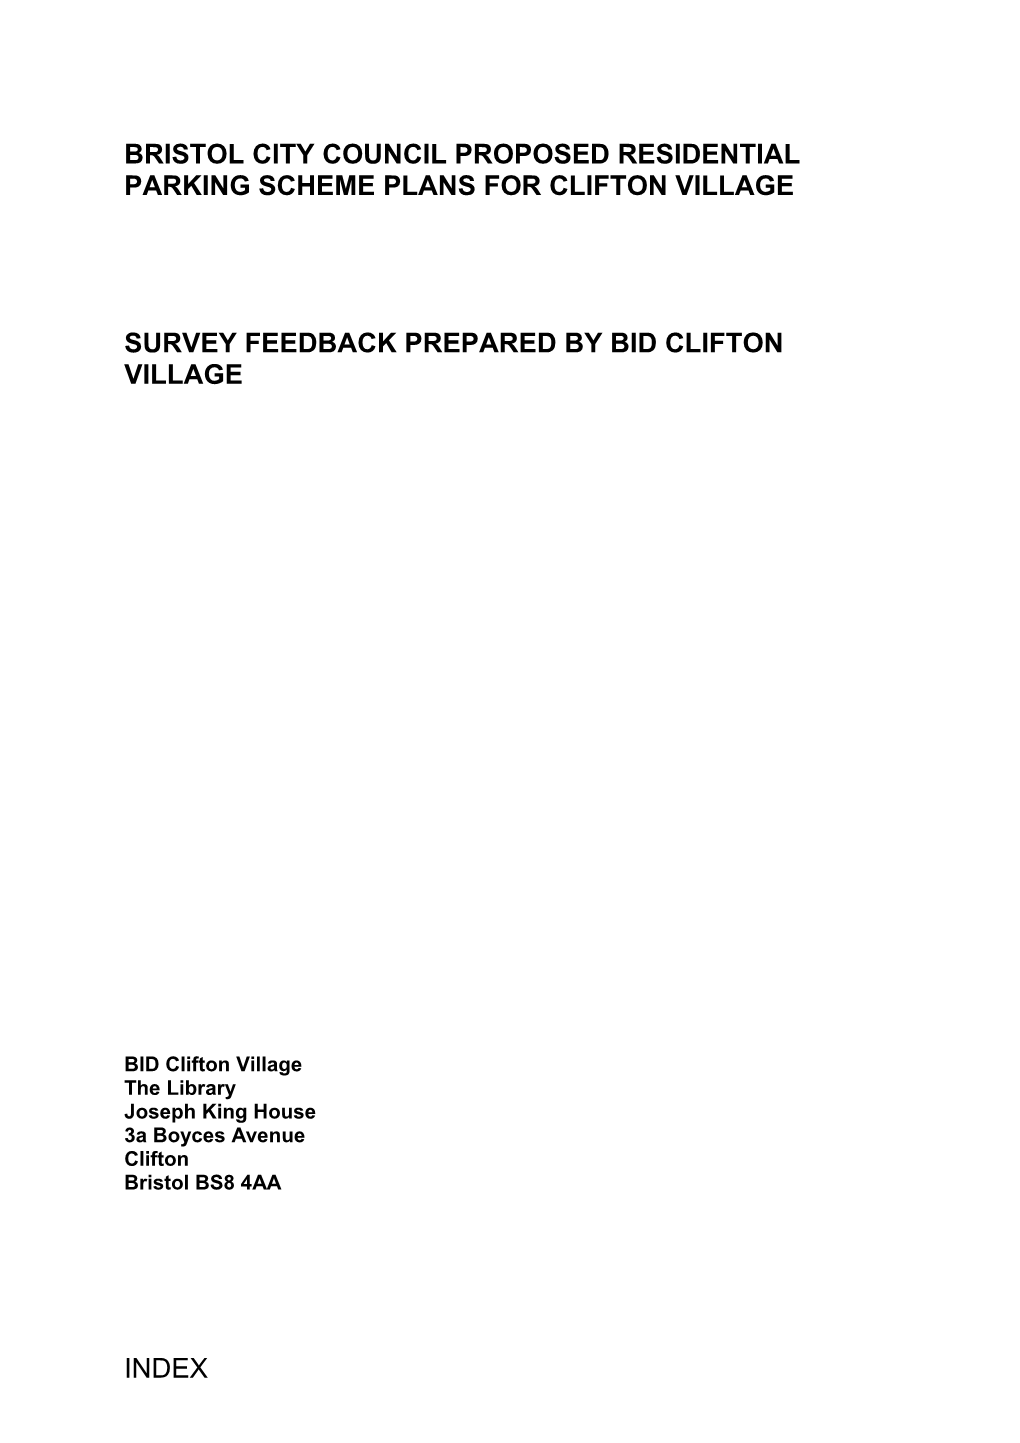 Bristol City Council Proposed Residential Parking Scheme Plans for Clifton Village